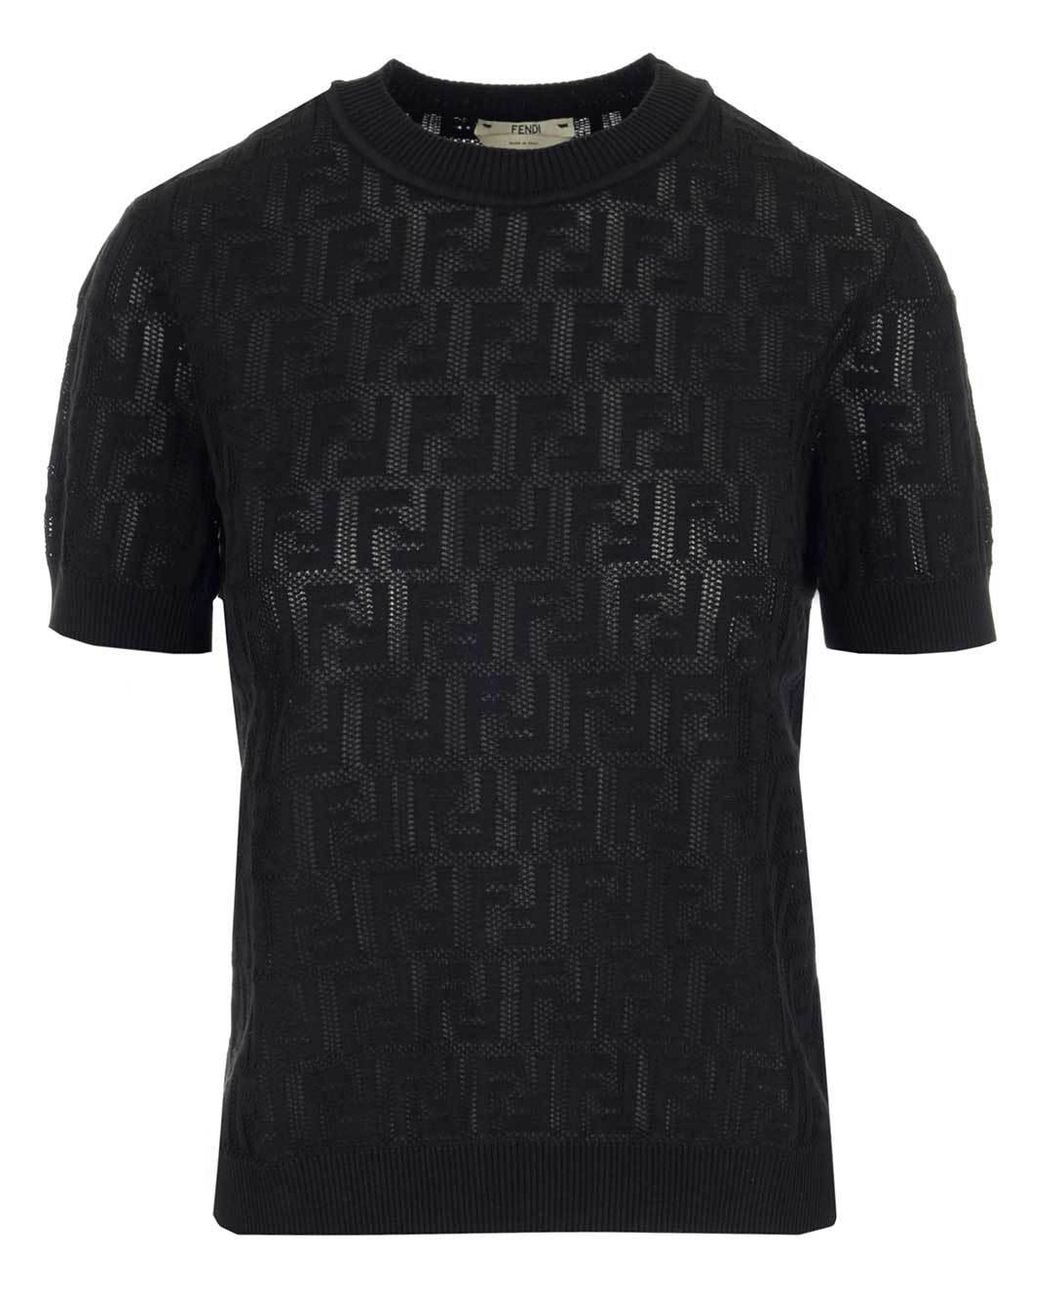 Fendi Monogram T-shirt in Black - Lyst